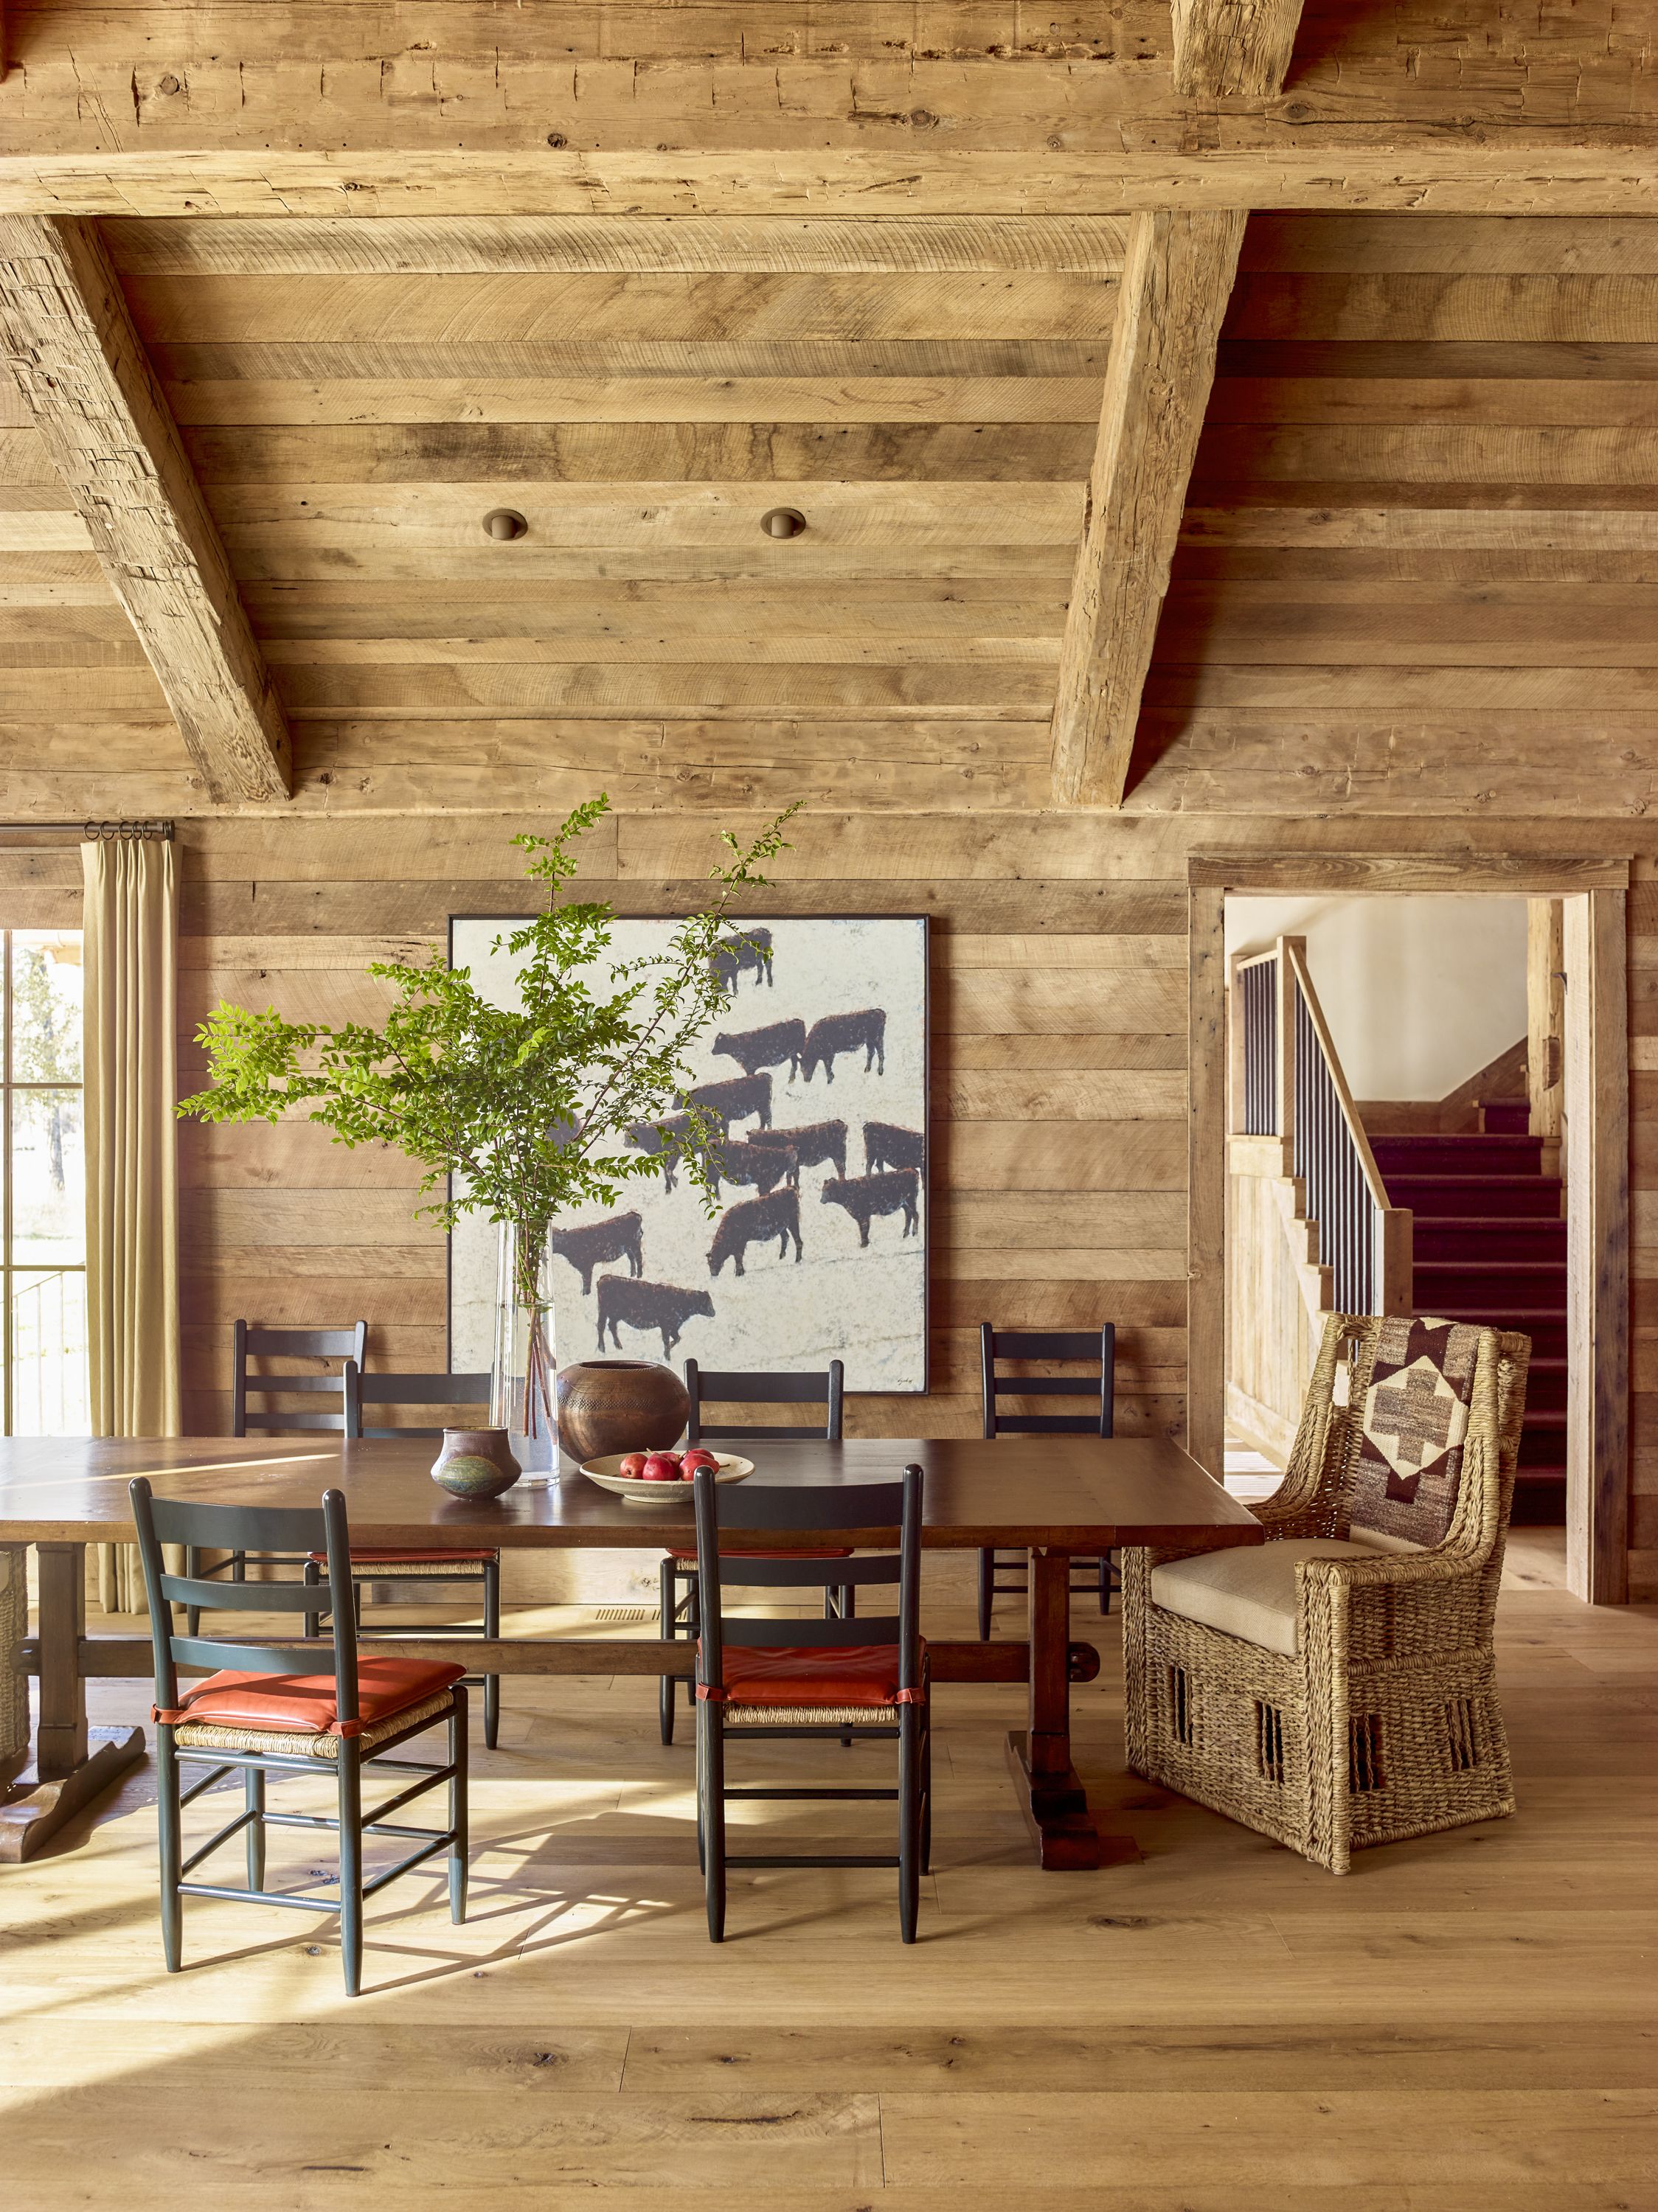 Inside the most elegant remodel you'll see in 2023 – the home of interior designer Kylee Shintaffer